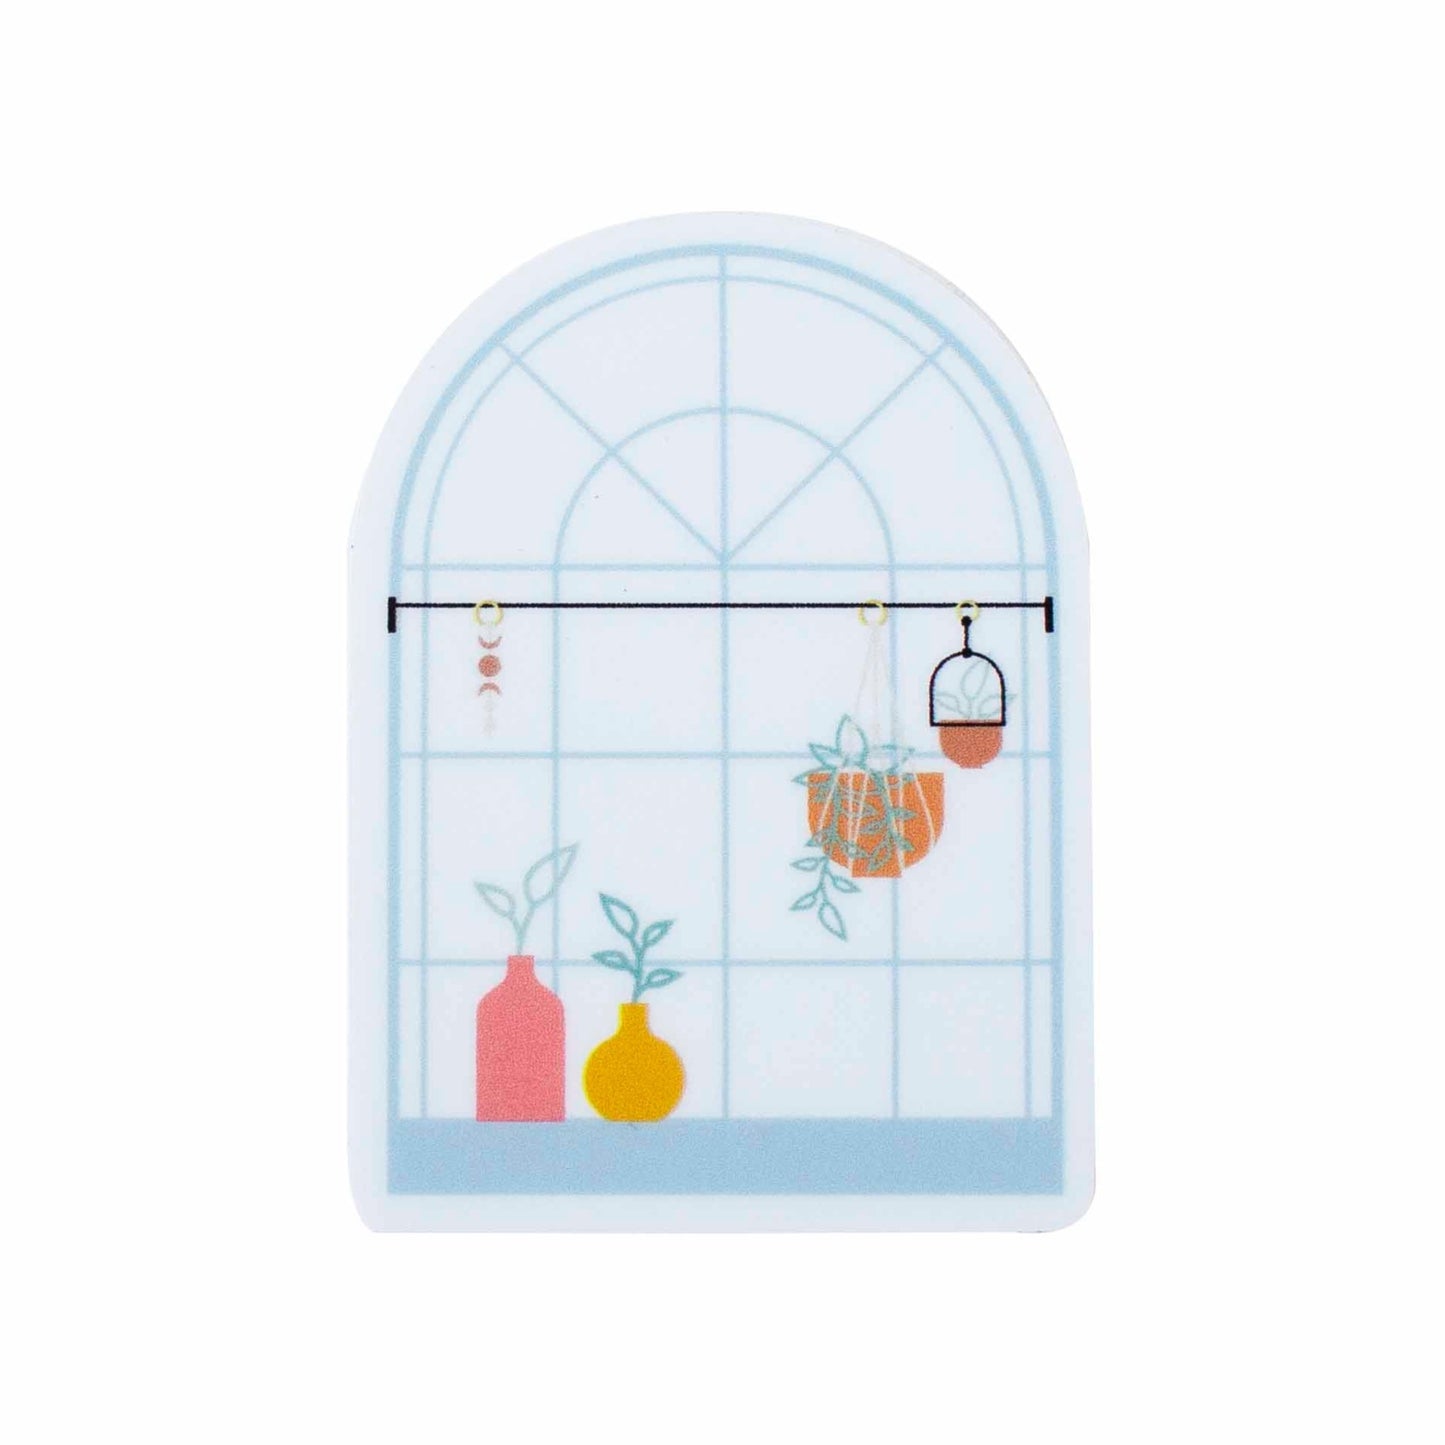 Greenhouse Window Sticker